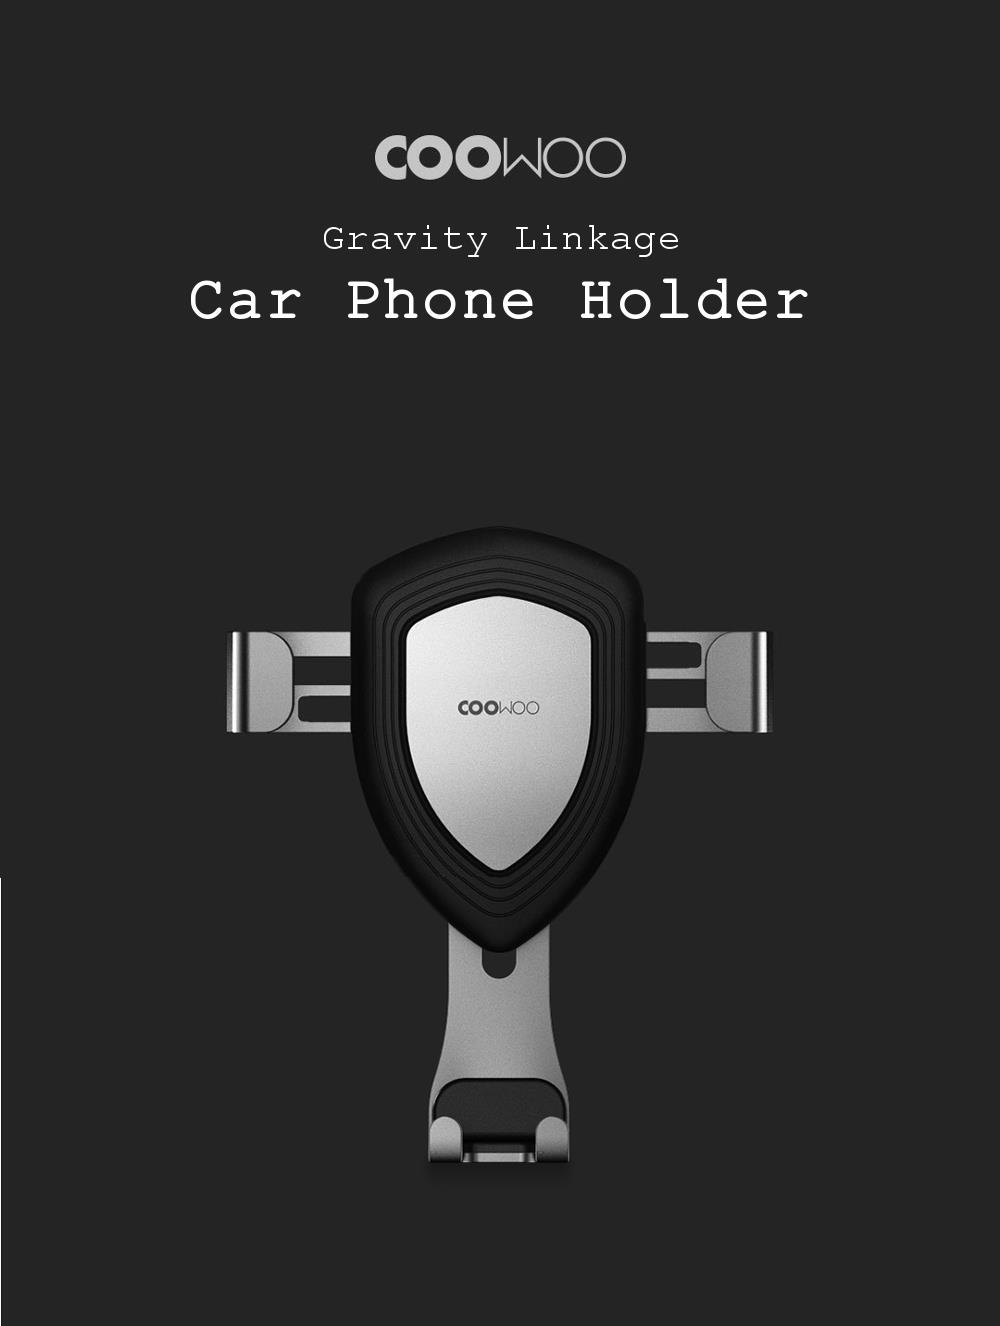 xiaomi coowoo car phone holder gravity linkage